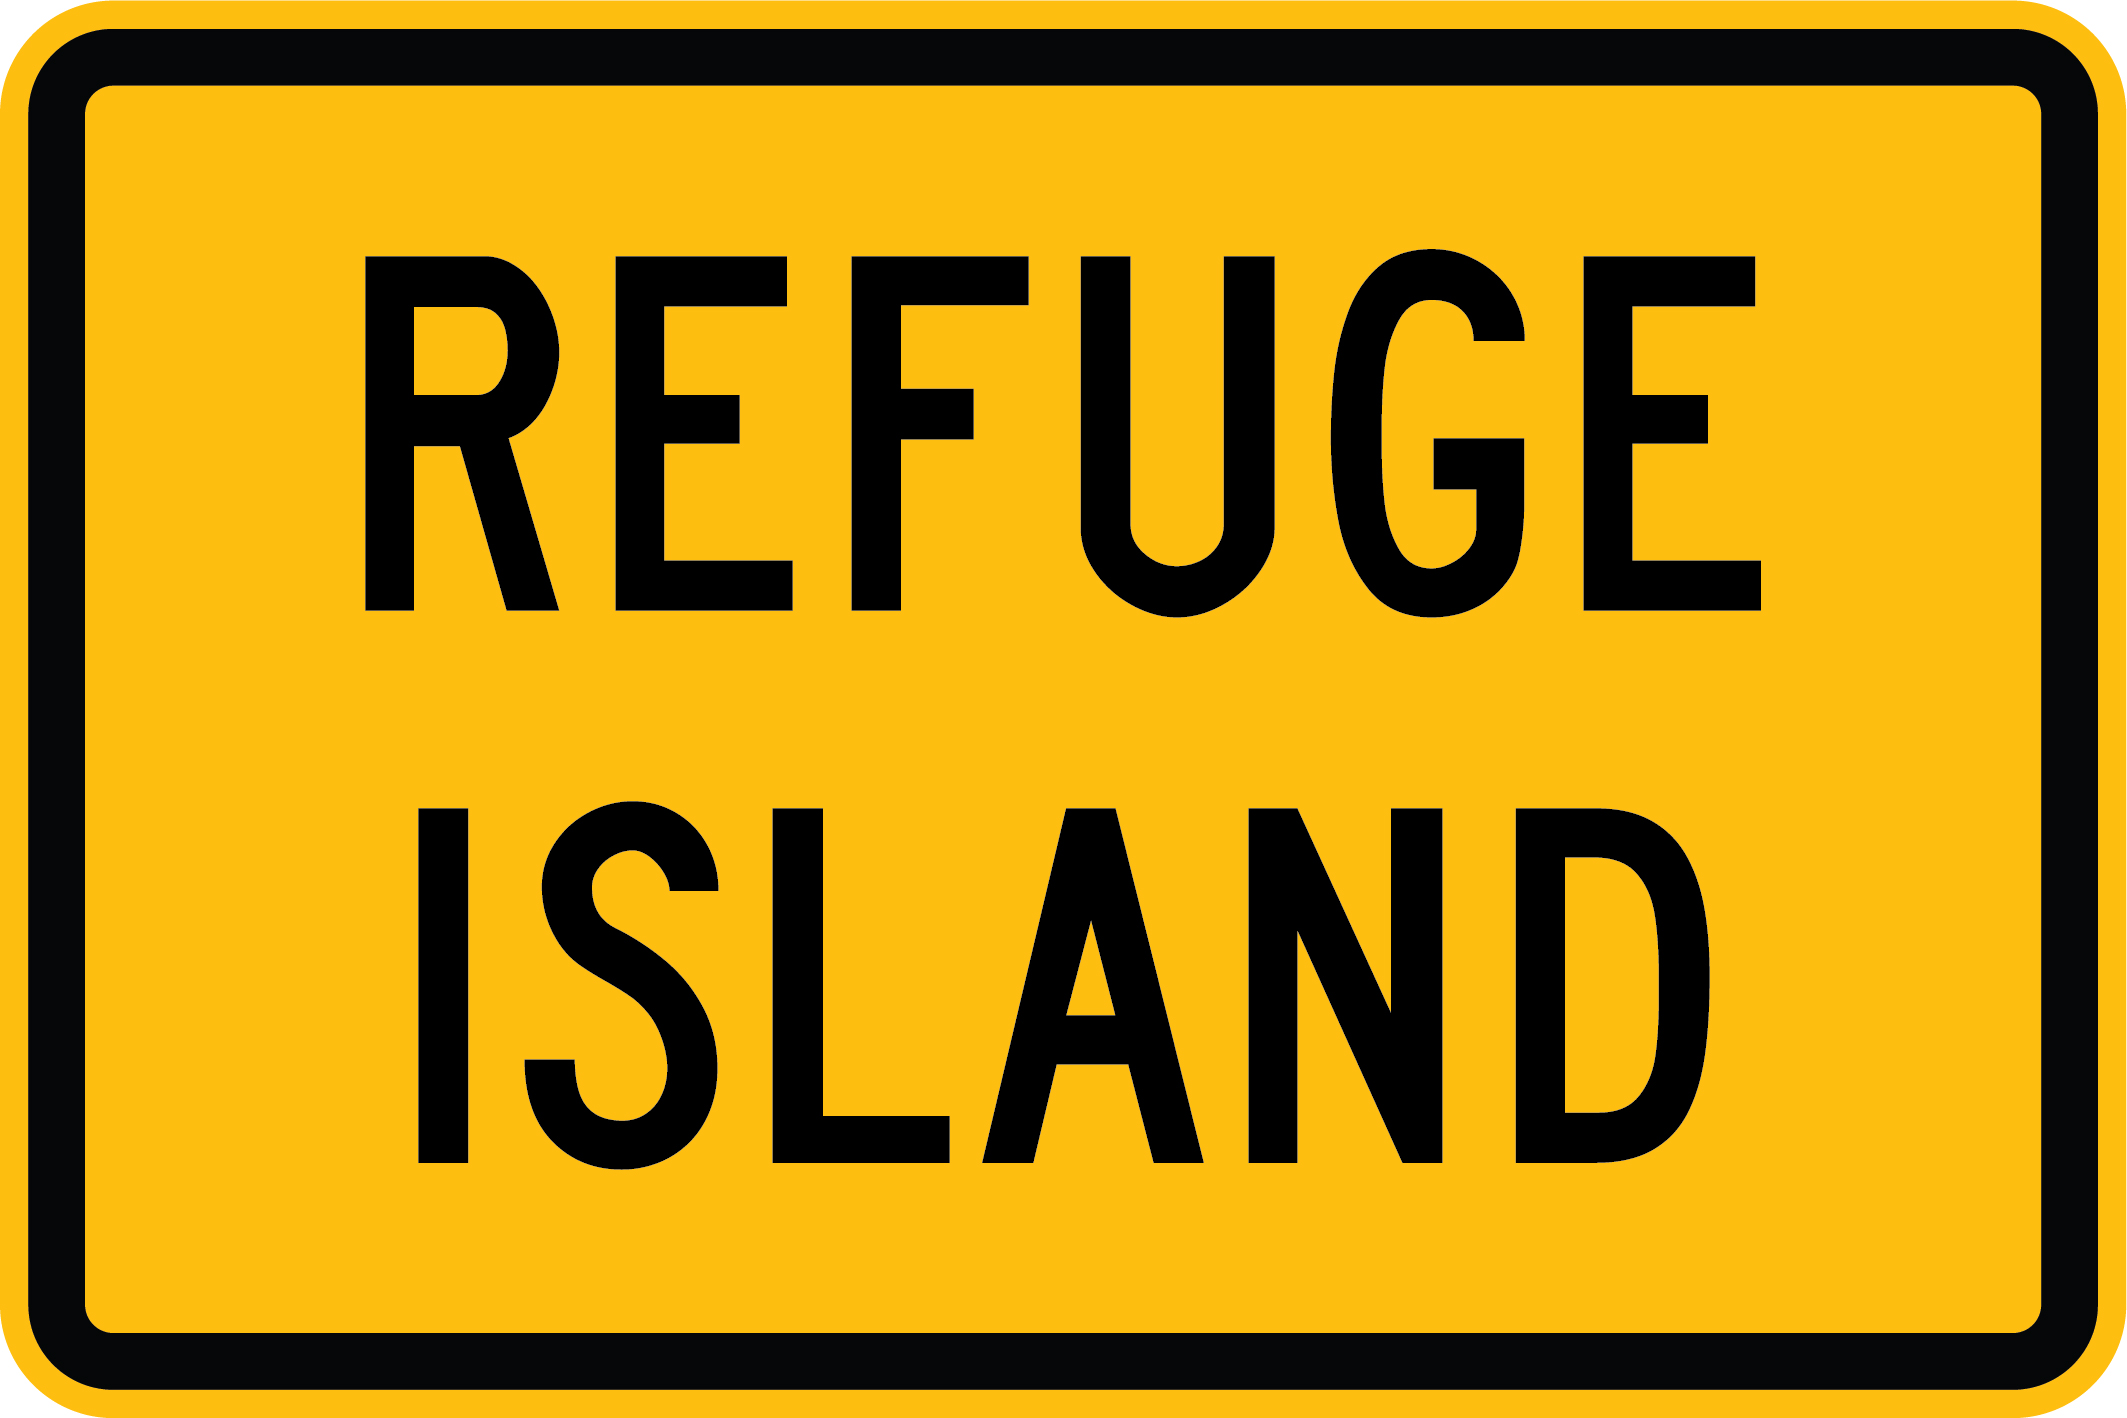 W8-25B - Refuge Island